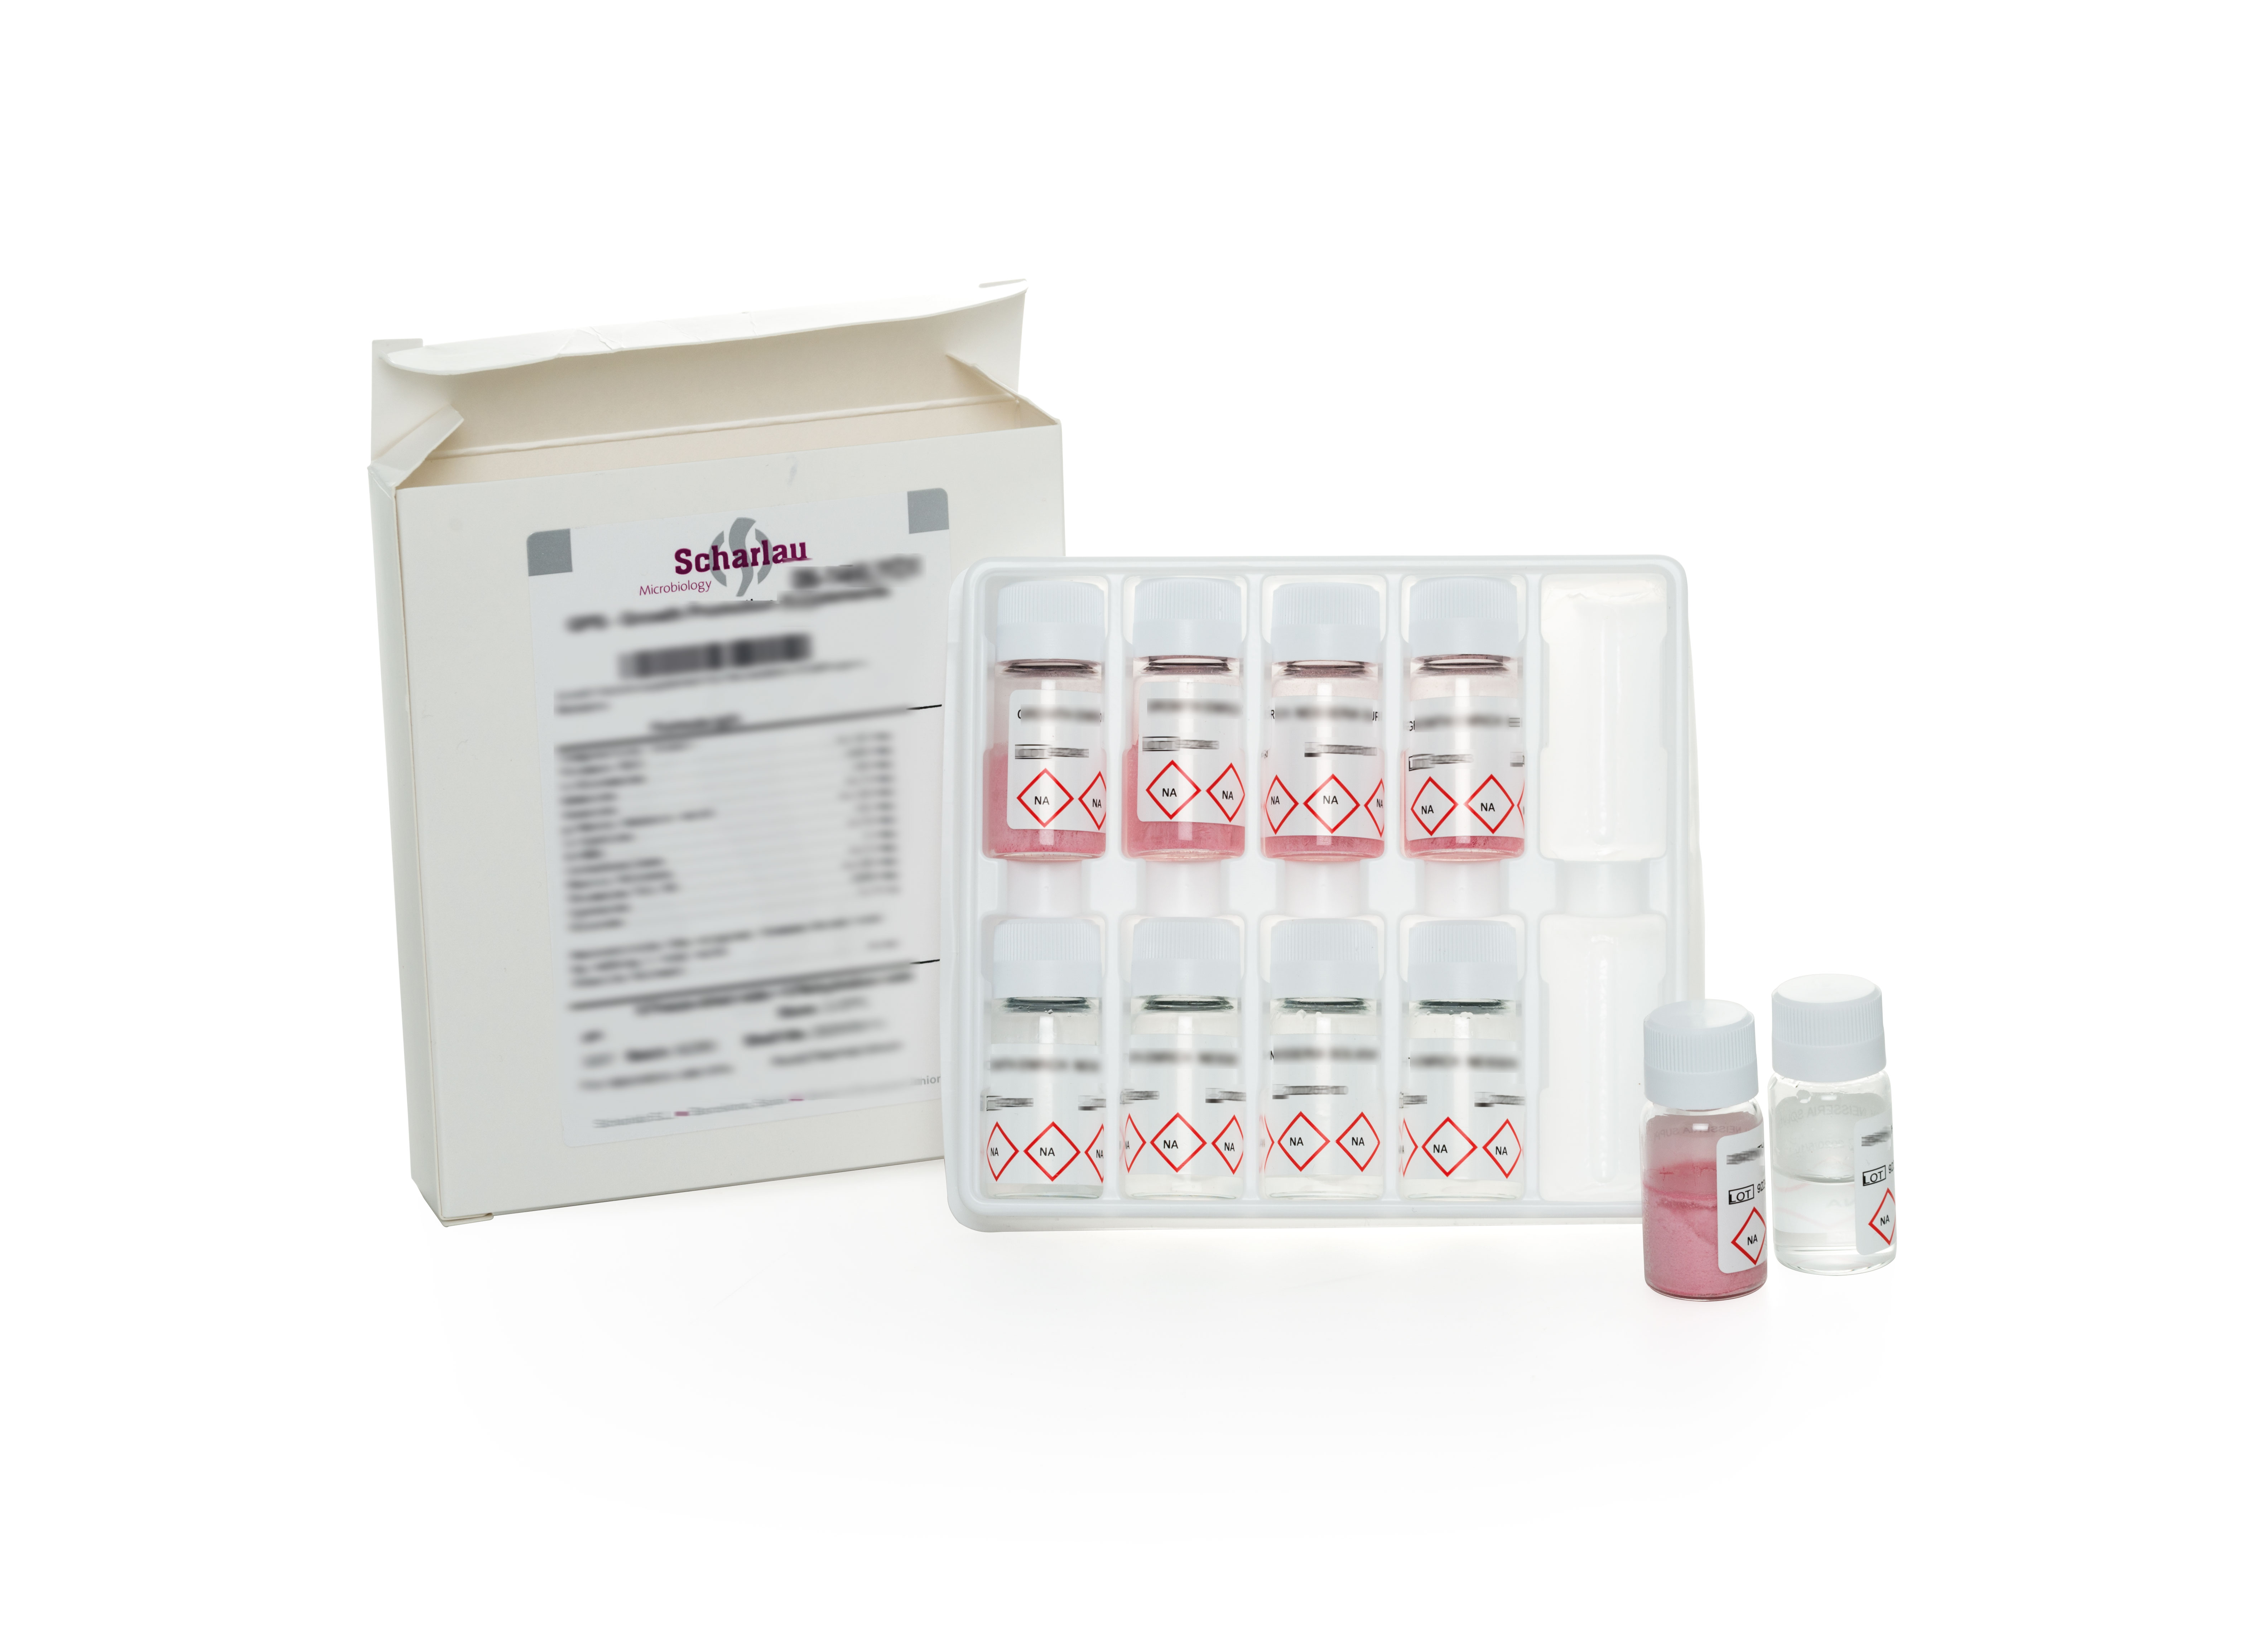 CNA CP Gram-Positive Selective Supplement. Sterile selective supplement the isolation of Gram positive cocci.